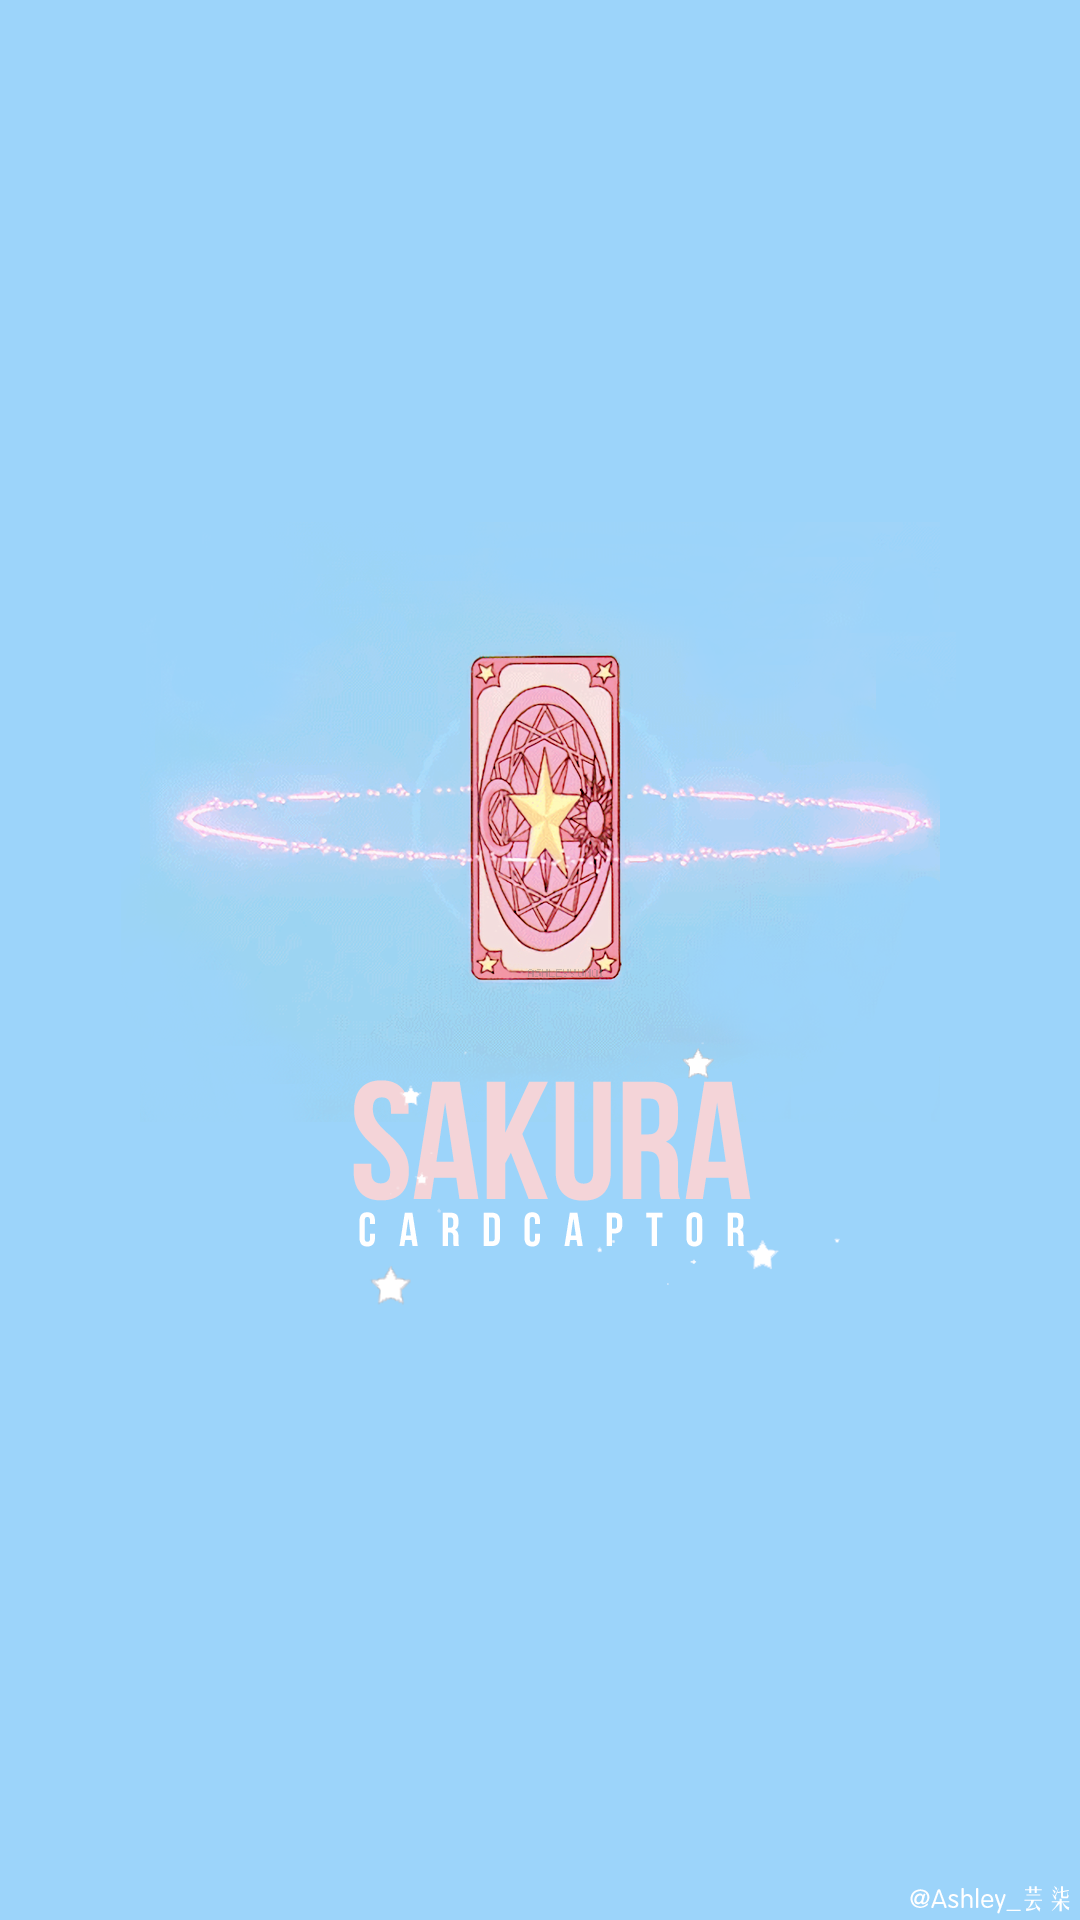 cardcaptor sakura wallpaper